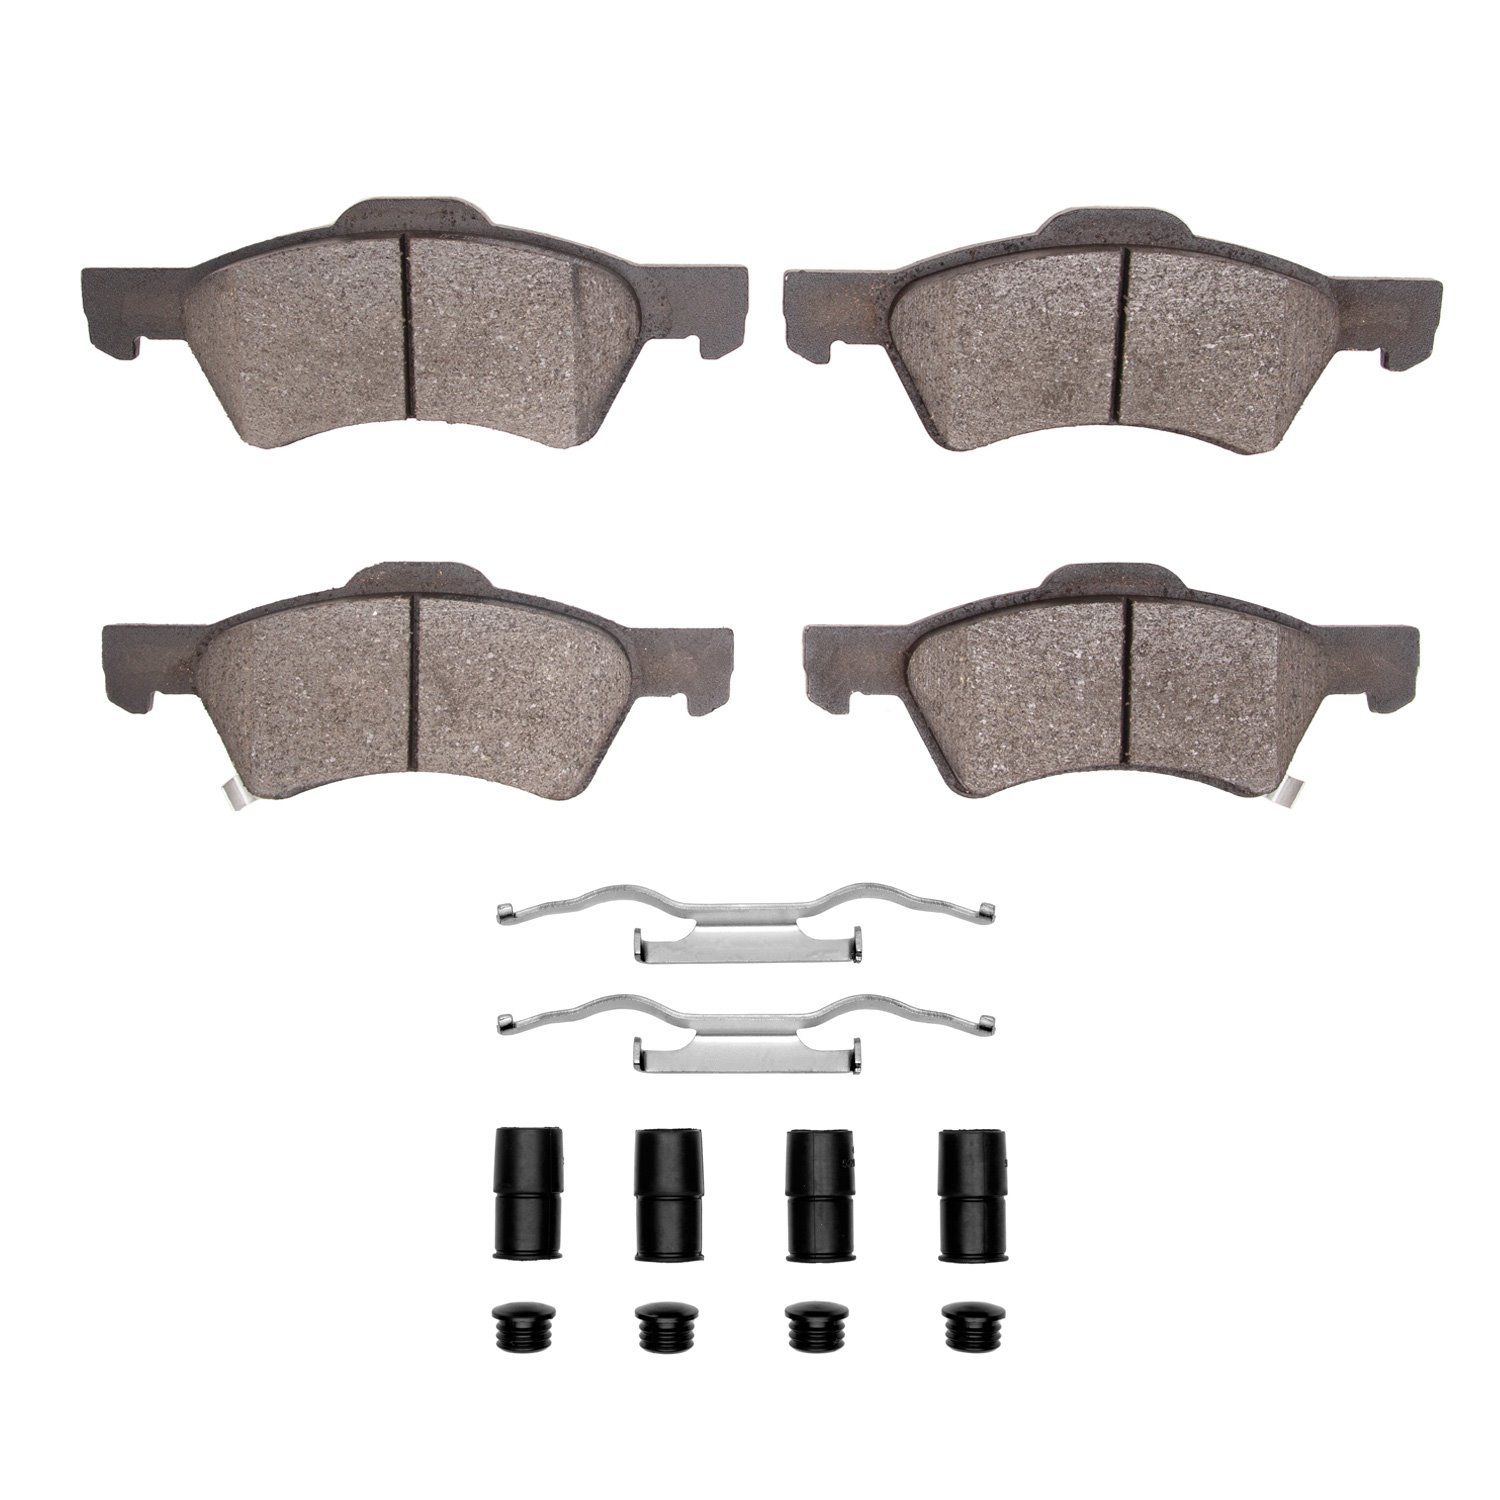 1310-0857-01 3000-Series Ceramic Brake Pads & Hardware Kit, 2001-2007 Mopar, Position: Front